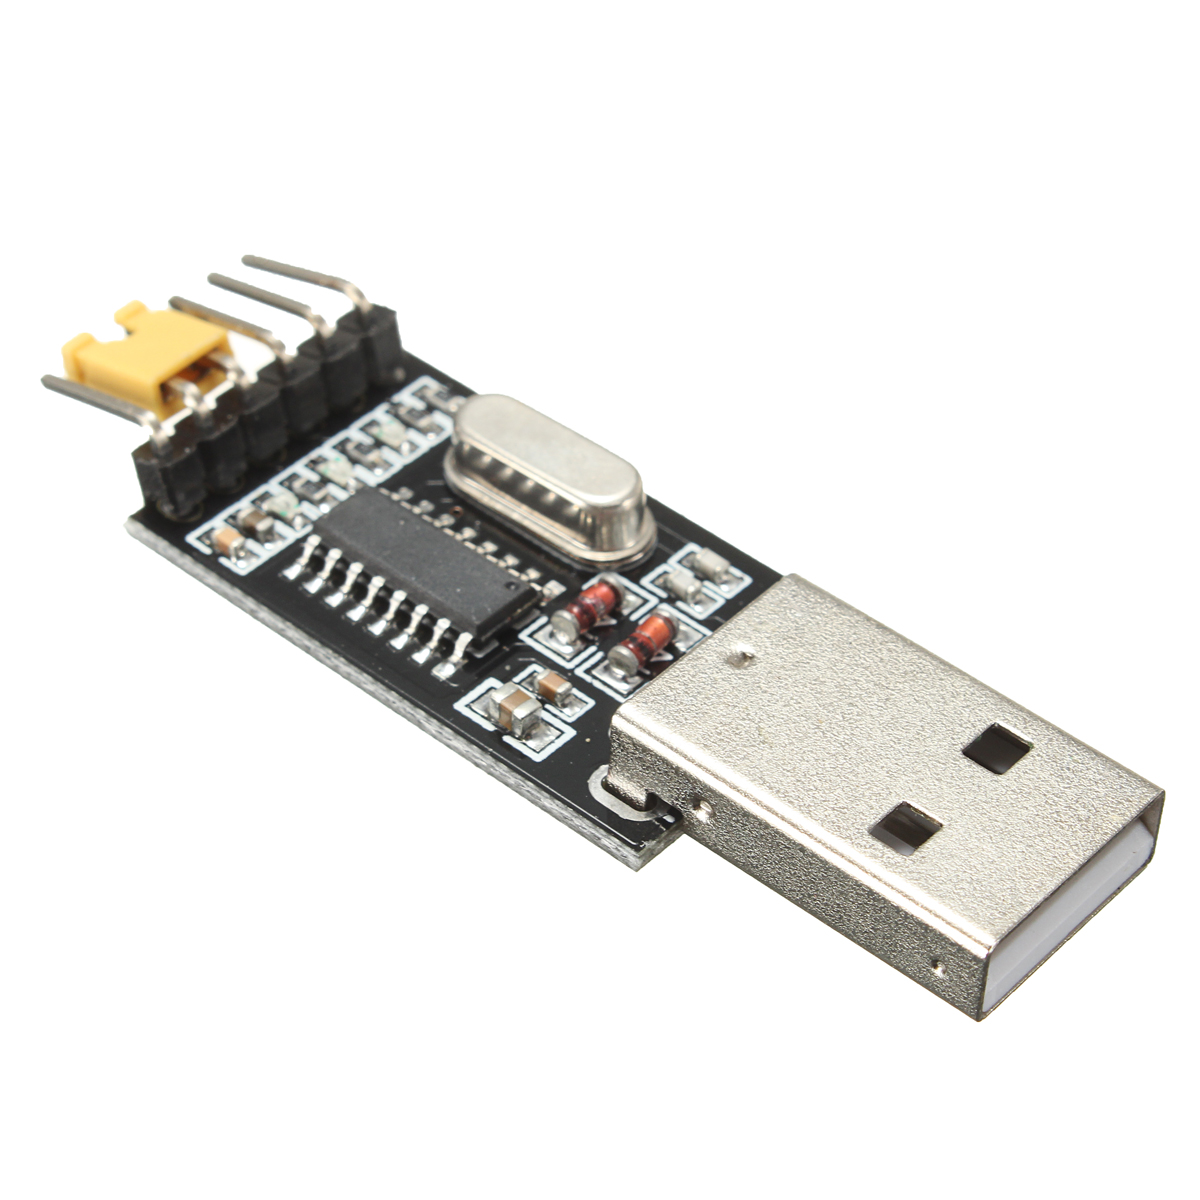 20pcs-33V-5V-USB-to-TTL-Converter-CH340G-UART-Serial-Adapter-Module-STC-1314968-2